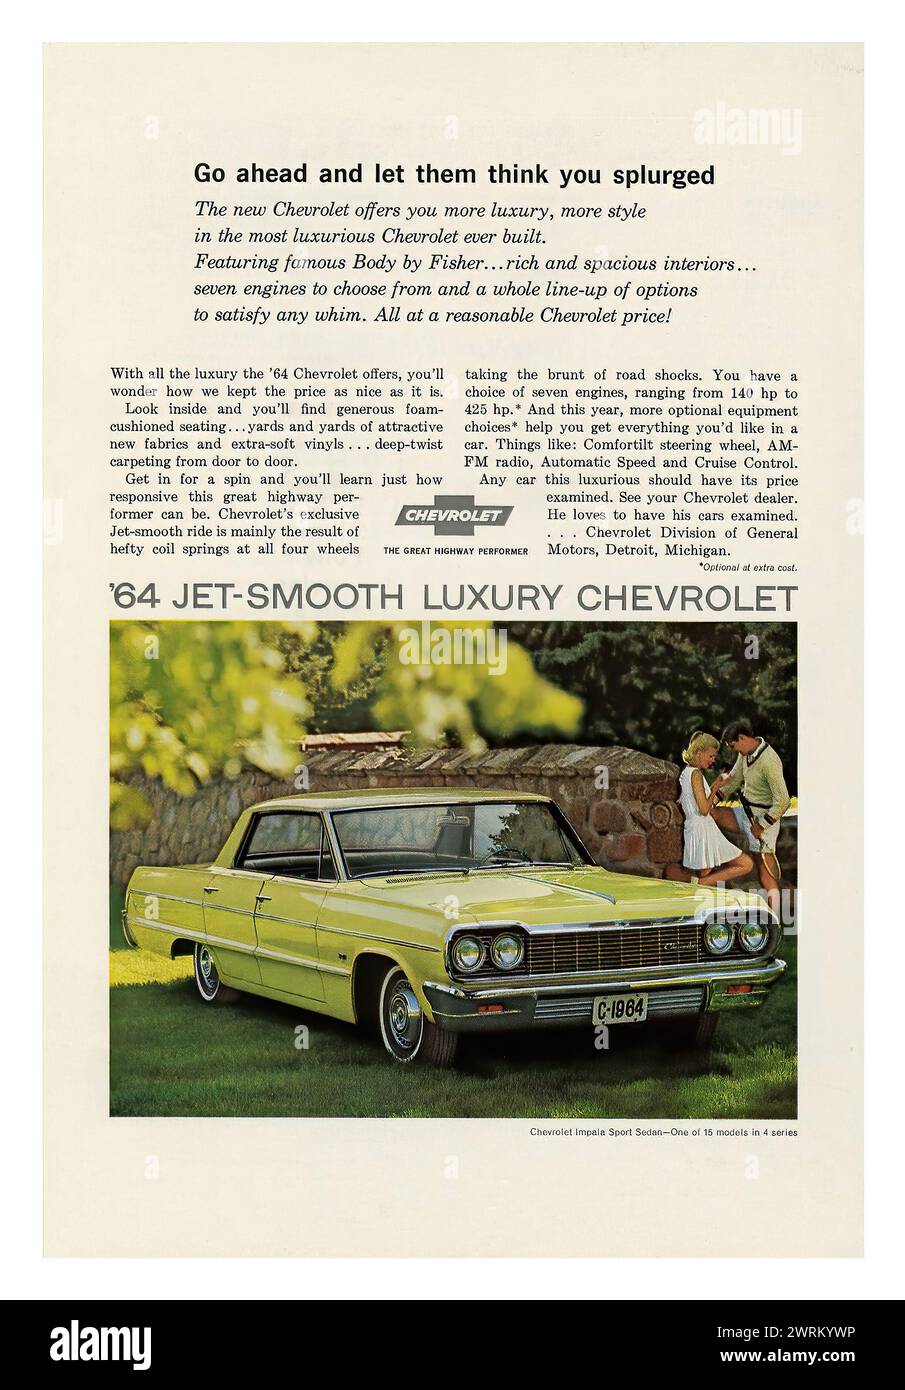 1964 Chevrolet Impala Sports Sedan  - Vintage American magazine car advert Stock Photo